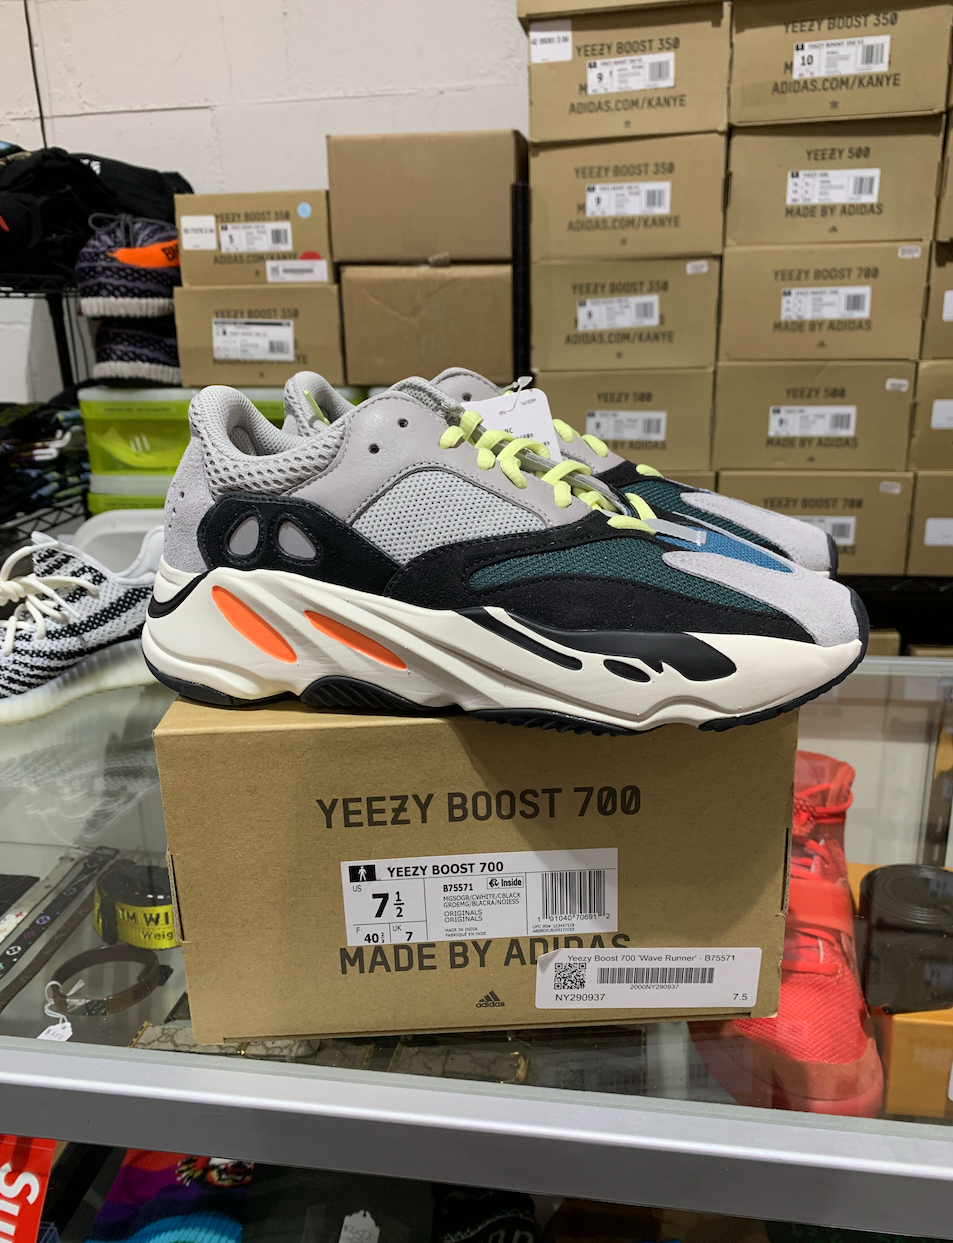 yeezy boost 700 wave runner retail